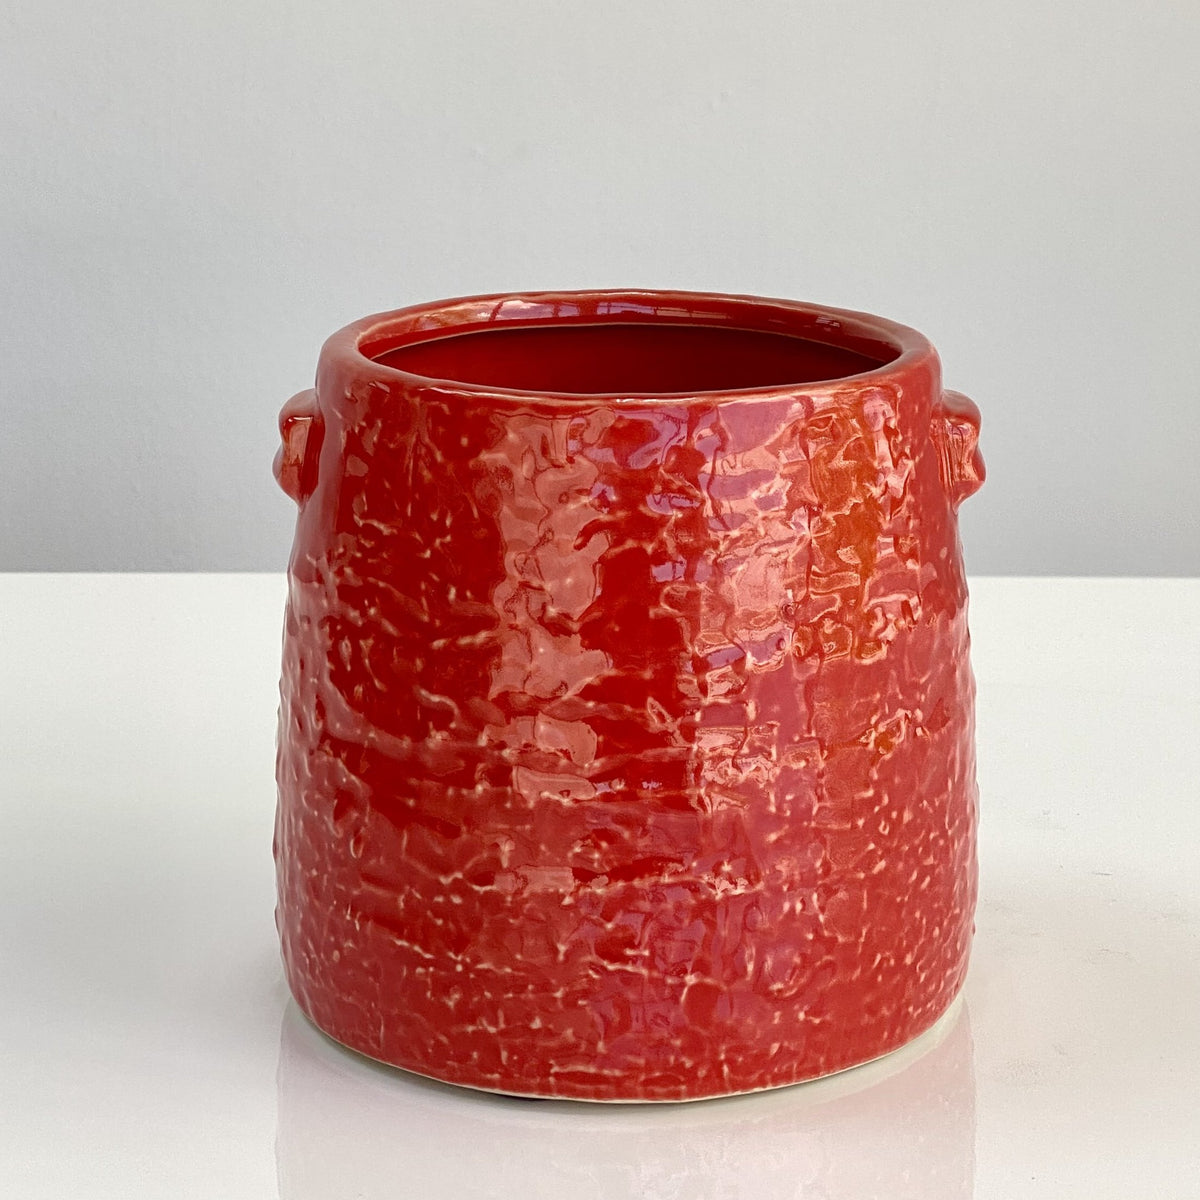 Glossy Stuccoed Red Ceramic Pot